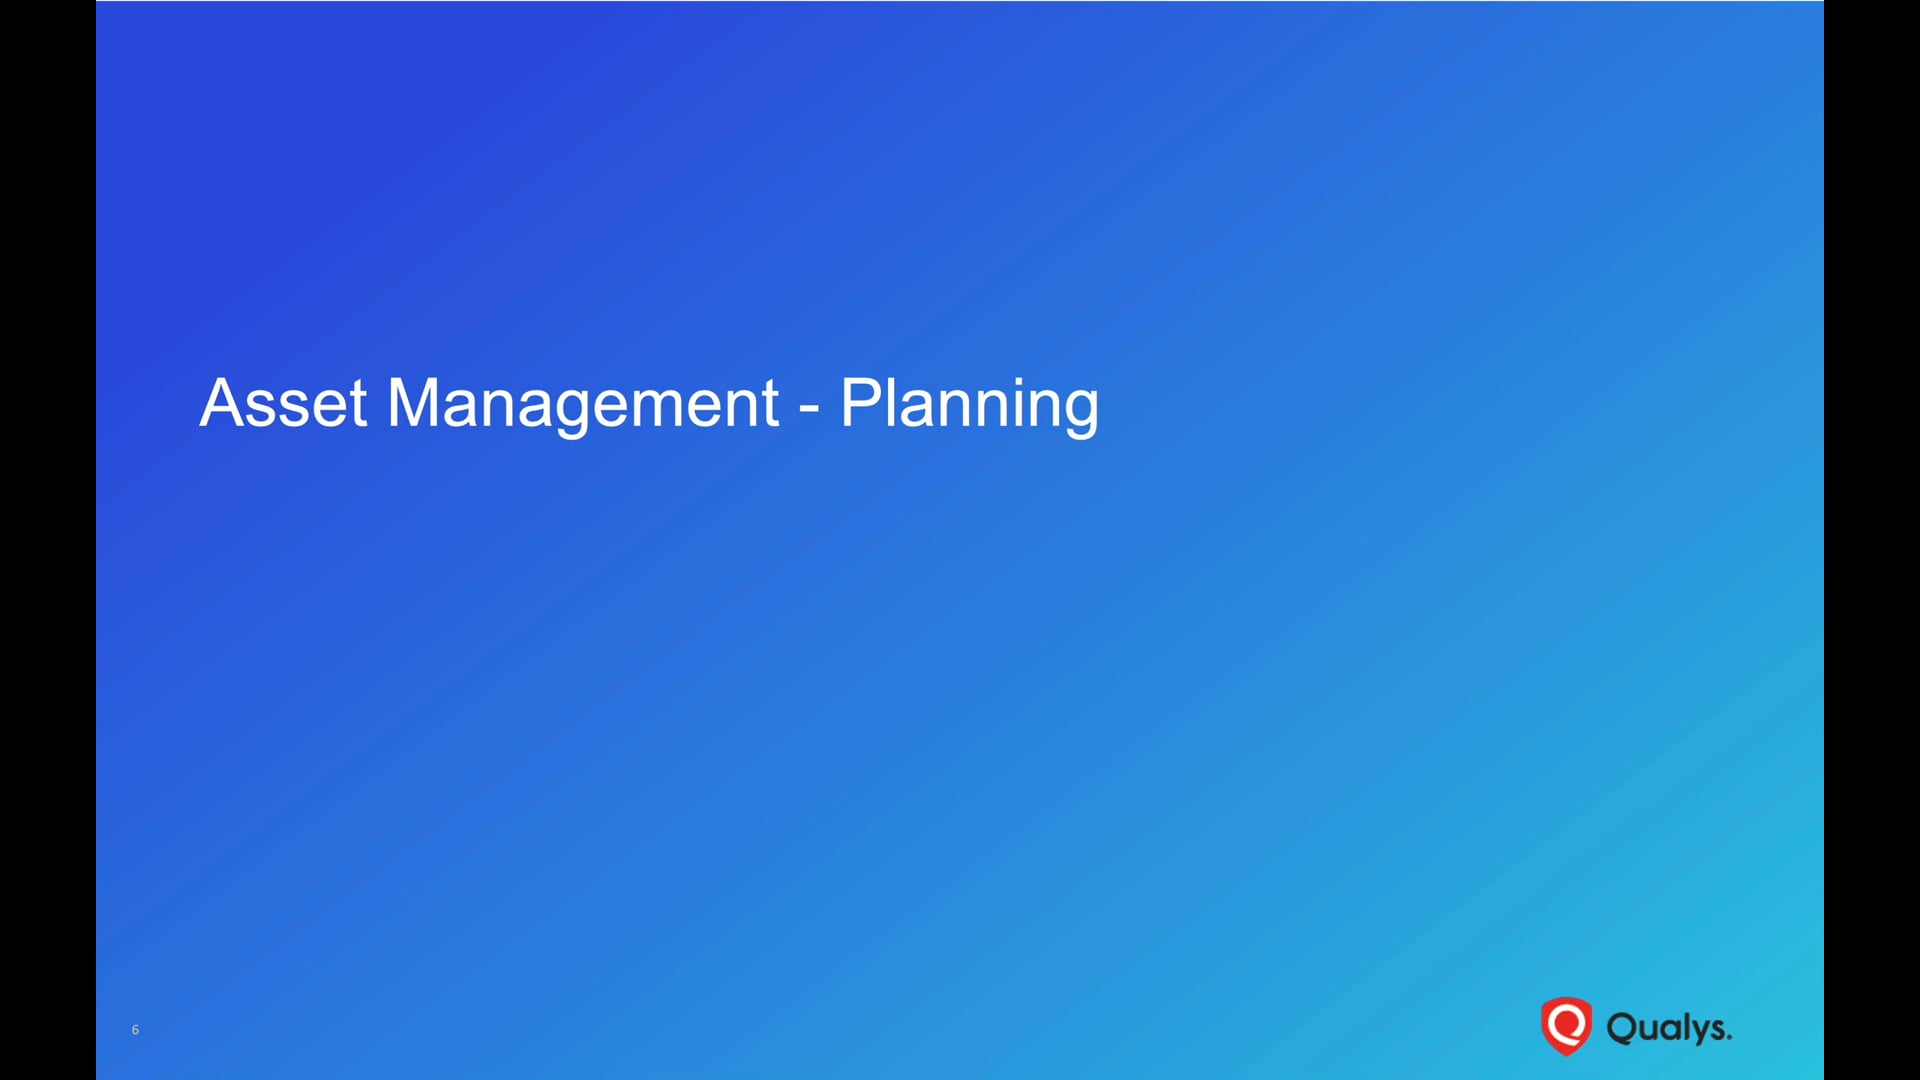 Asset Management - Planning